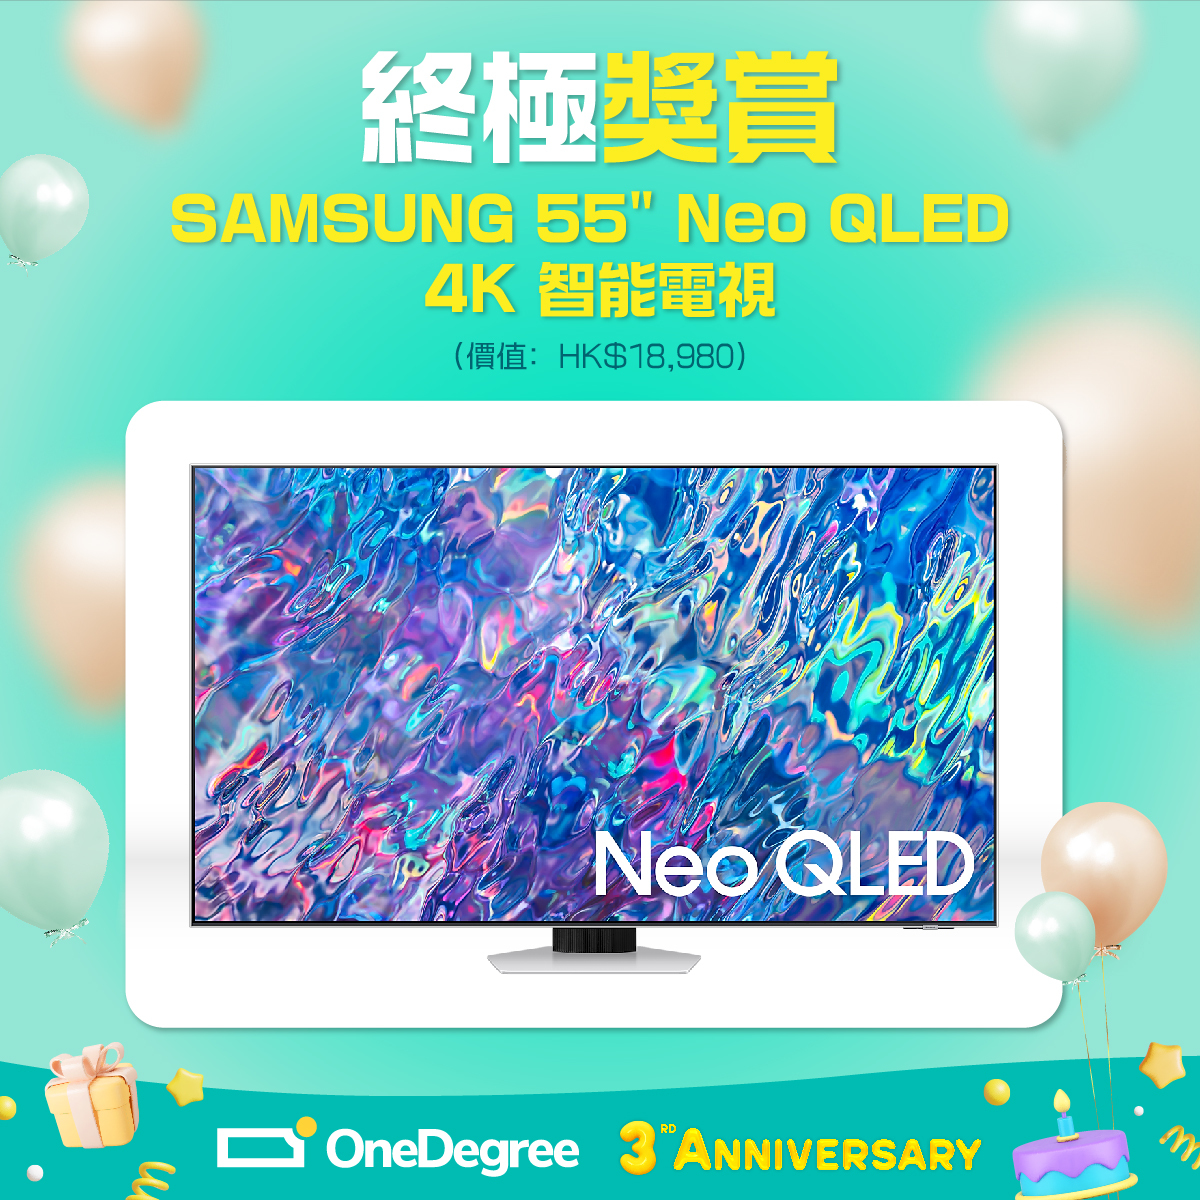 OneDegree 終極獎賞 SAMSUNG 55" NEO QLED 4K 智能電視